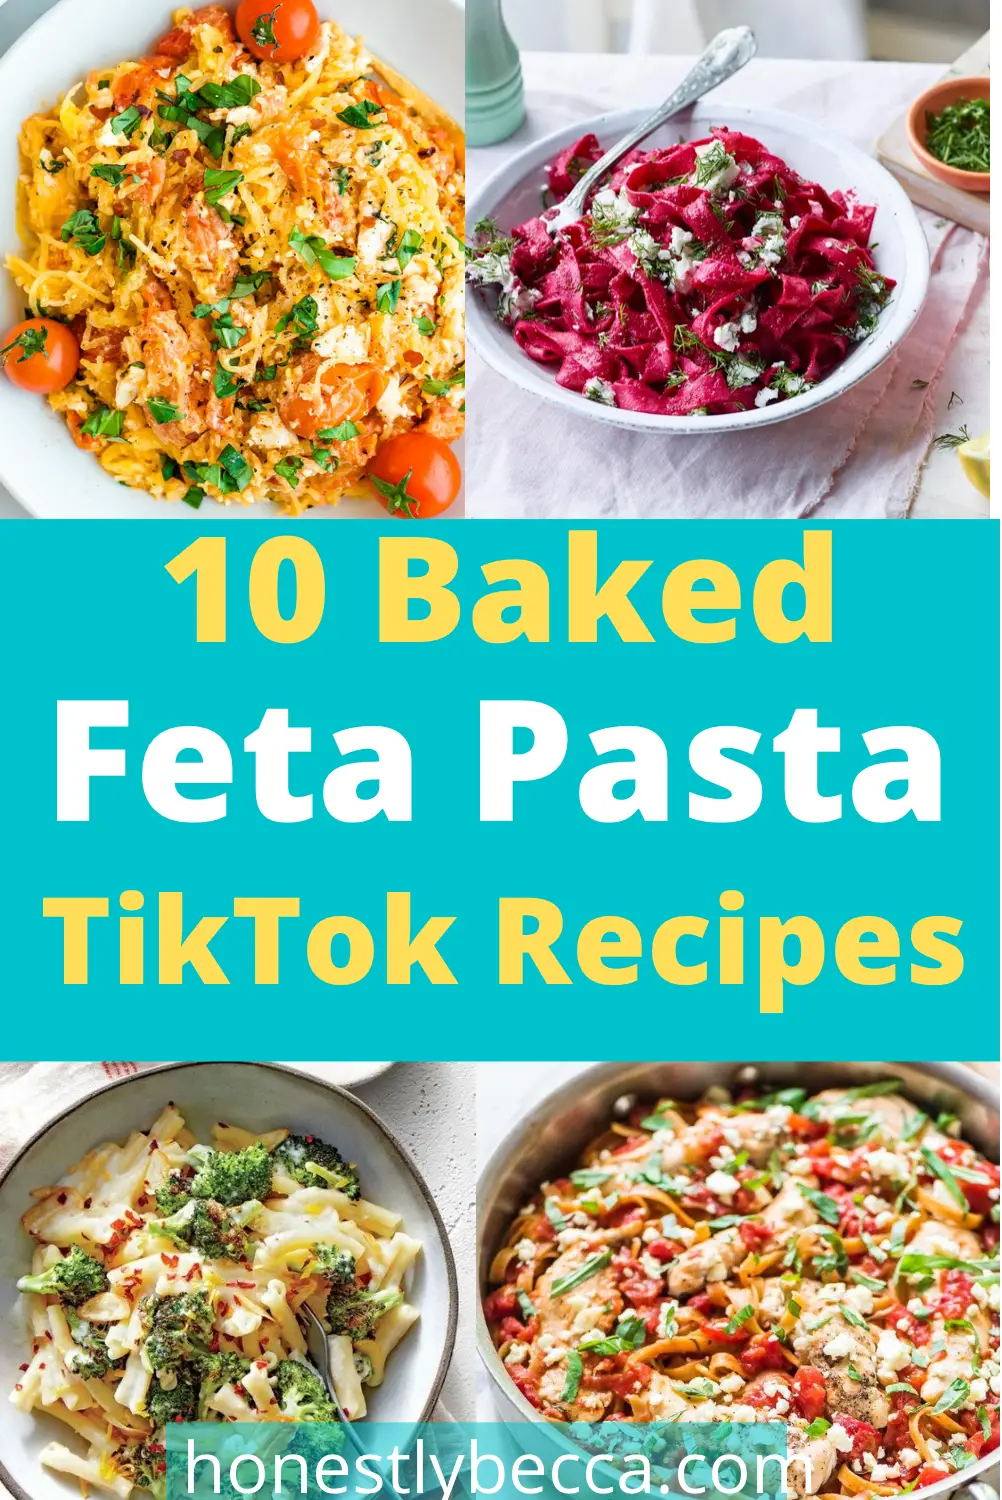 10 Delicious TikTok Baked Feta Pasta Recipes You'll Love. - honestlybecca